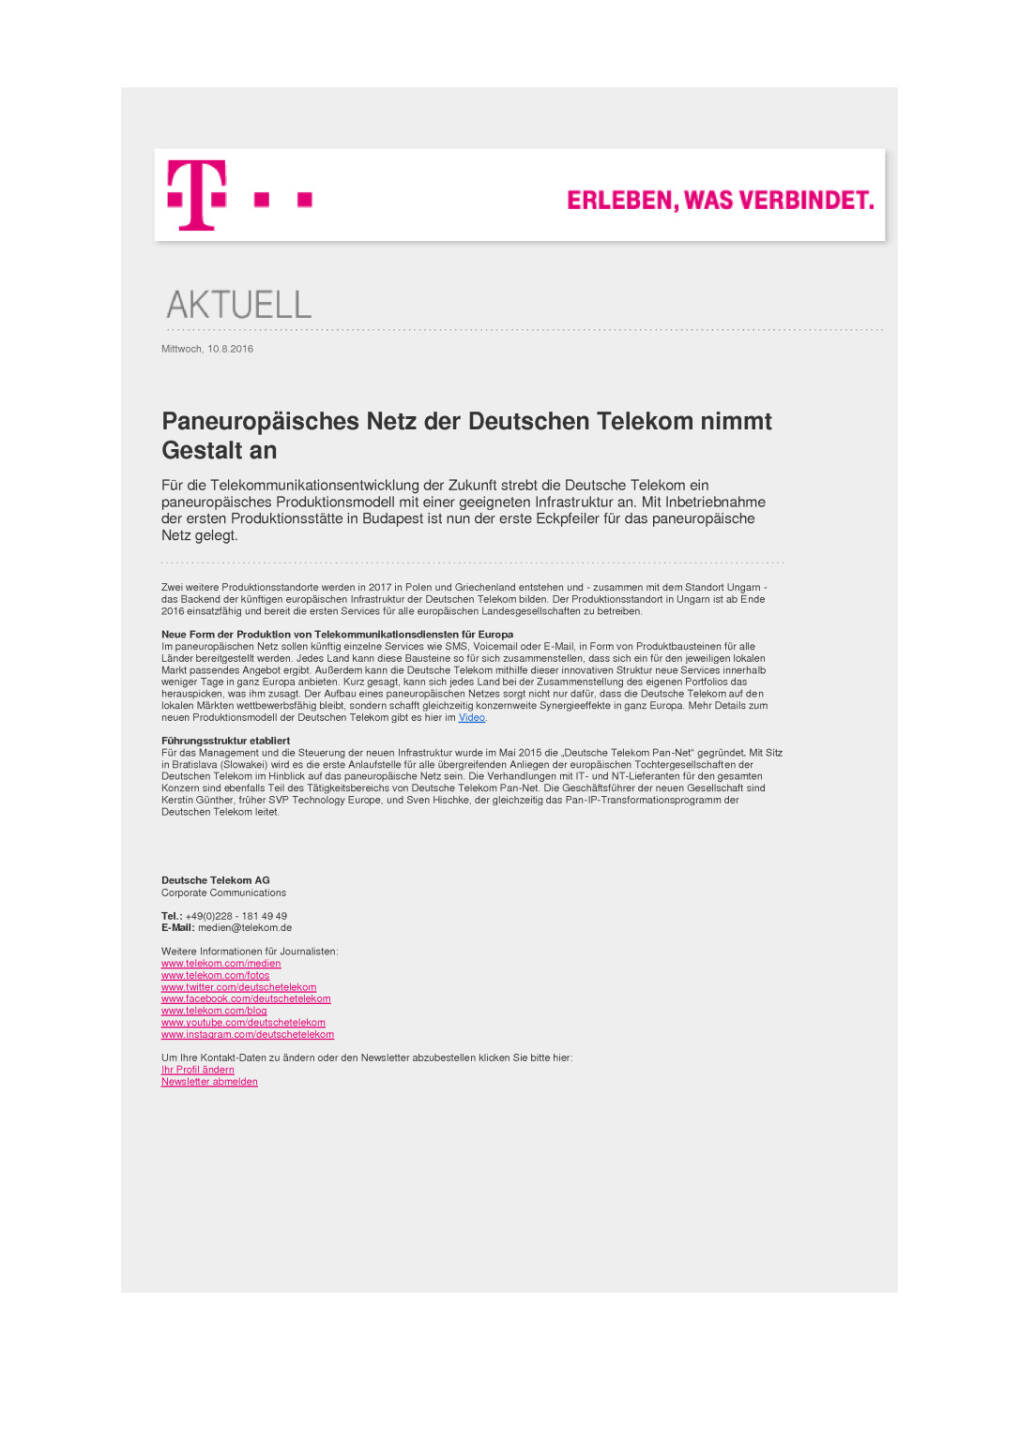 Deutsche Telekom: Paneuropäisches Netz nimmt Gestalt an, Seite 1/1, komplettes Dokument unter http://boerse-social.com/static/uploads/file_1600_deutsche_telekom_paneuropaisches_netz_nimmt_gestalt_an.pdf